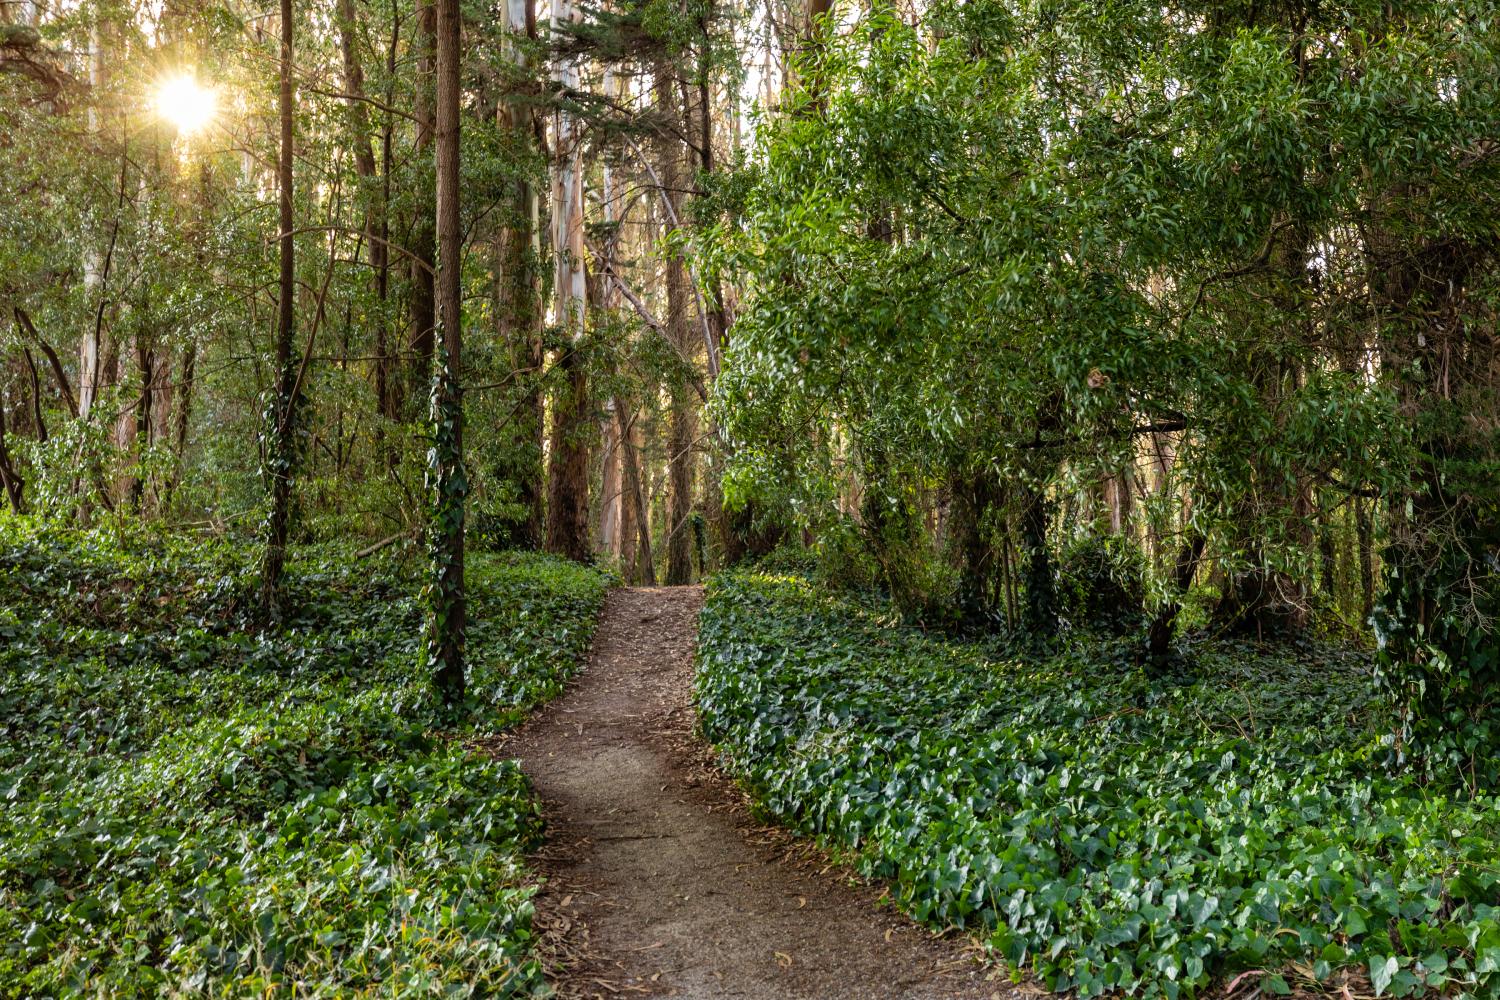 Park Trail winding through a eucalyptus forest.